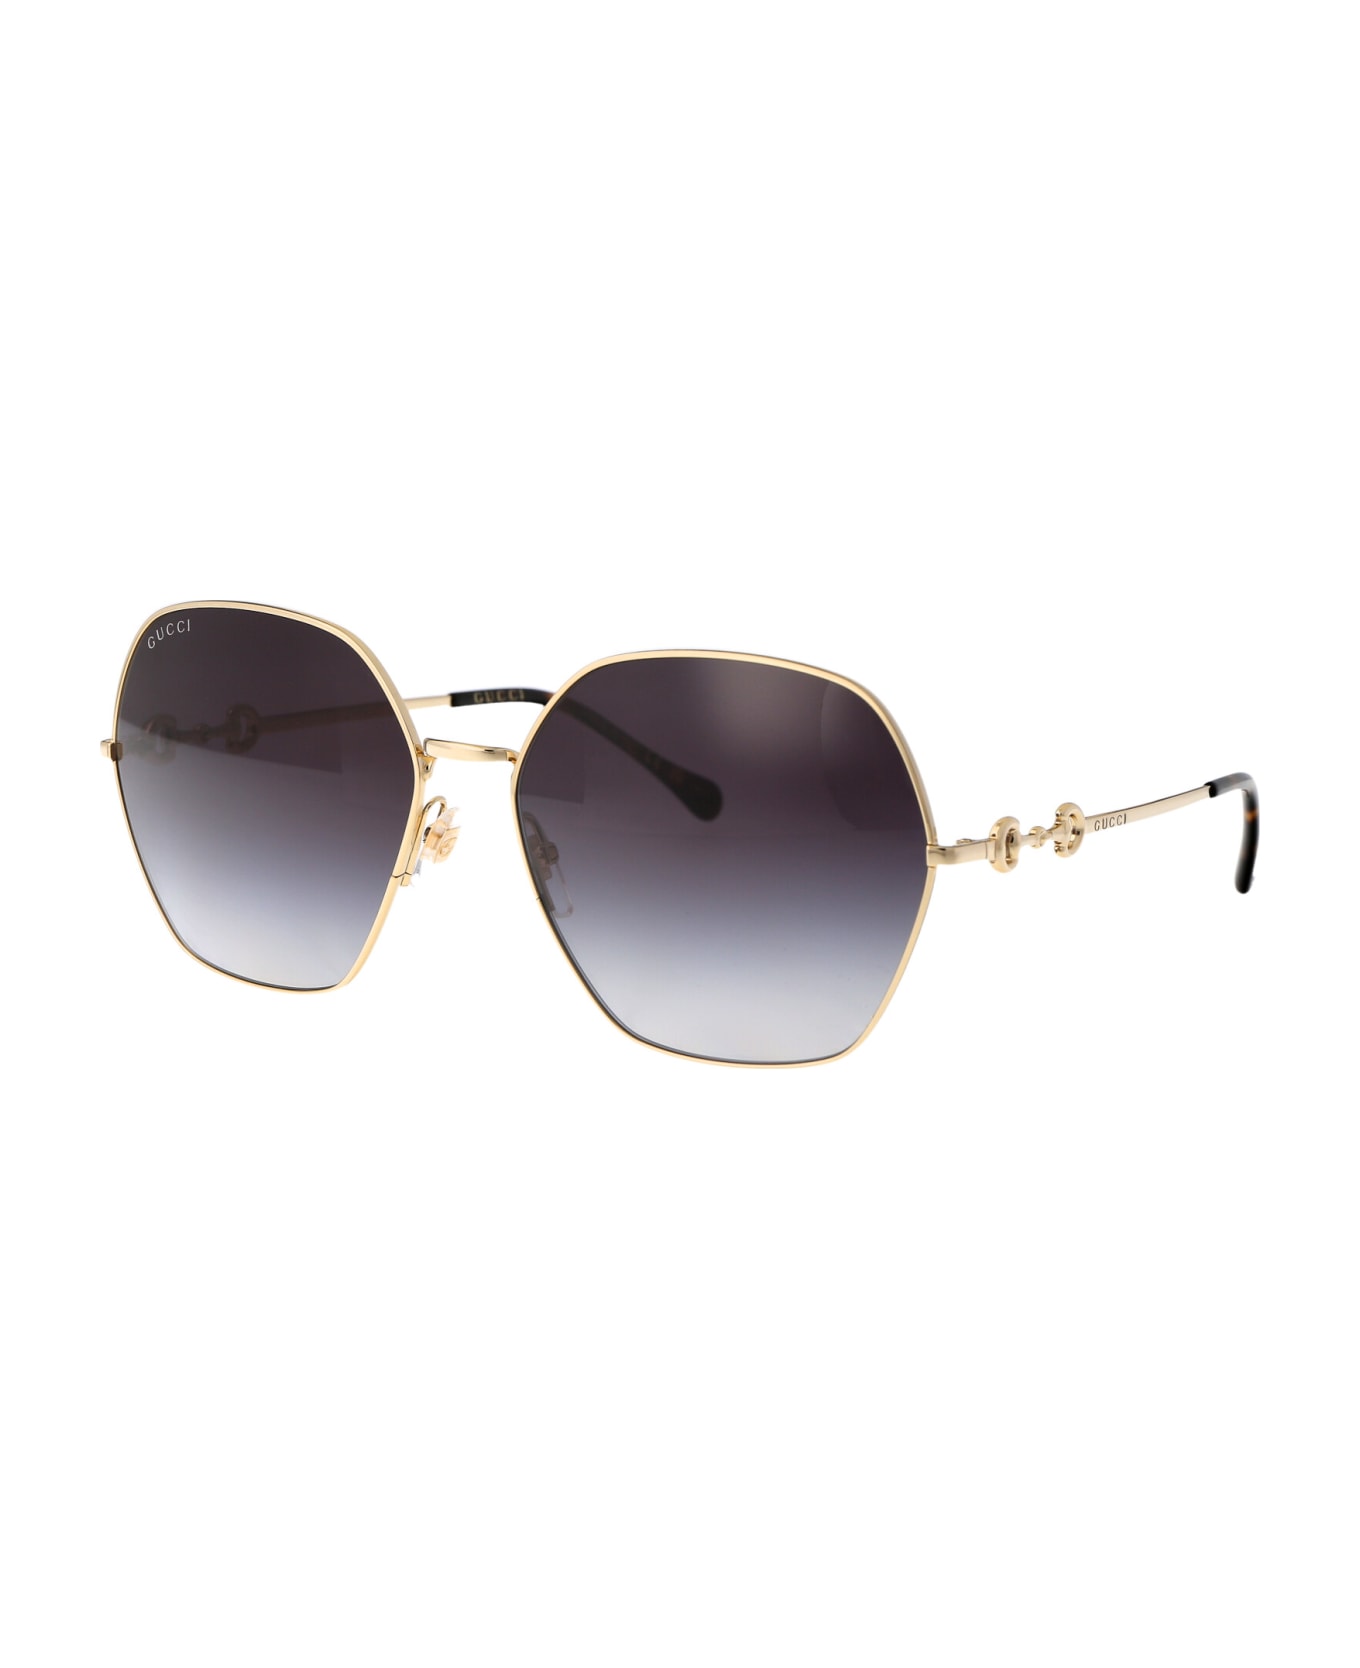 Gucci Eyewear Gg1335s Sunglasses - 001 GOLD GOLD GREY